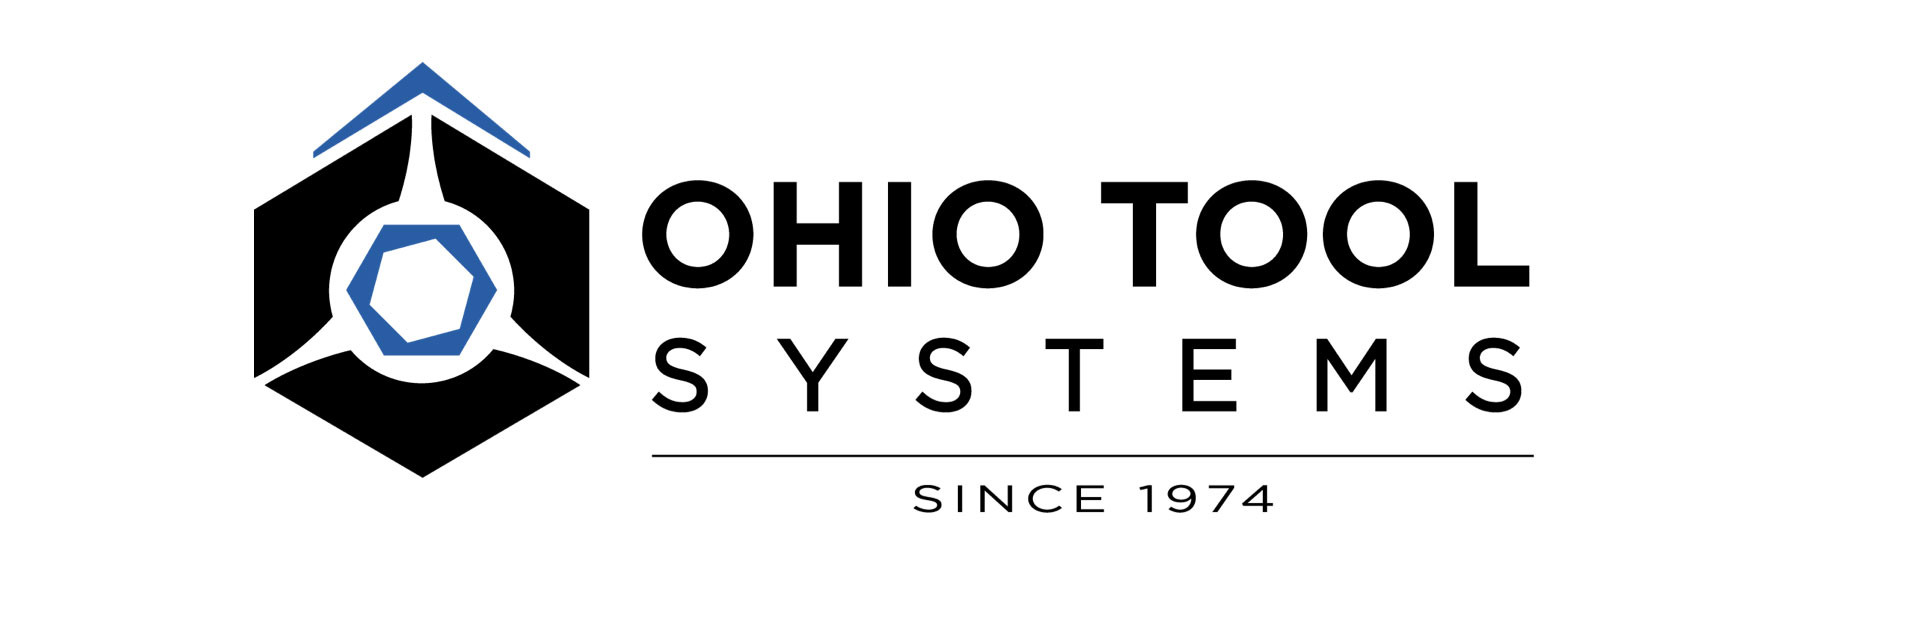 Ohio Tool Systems